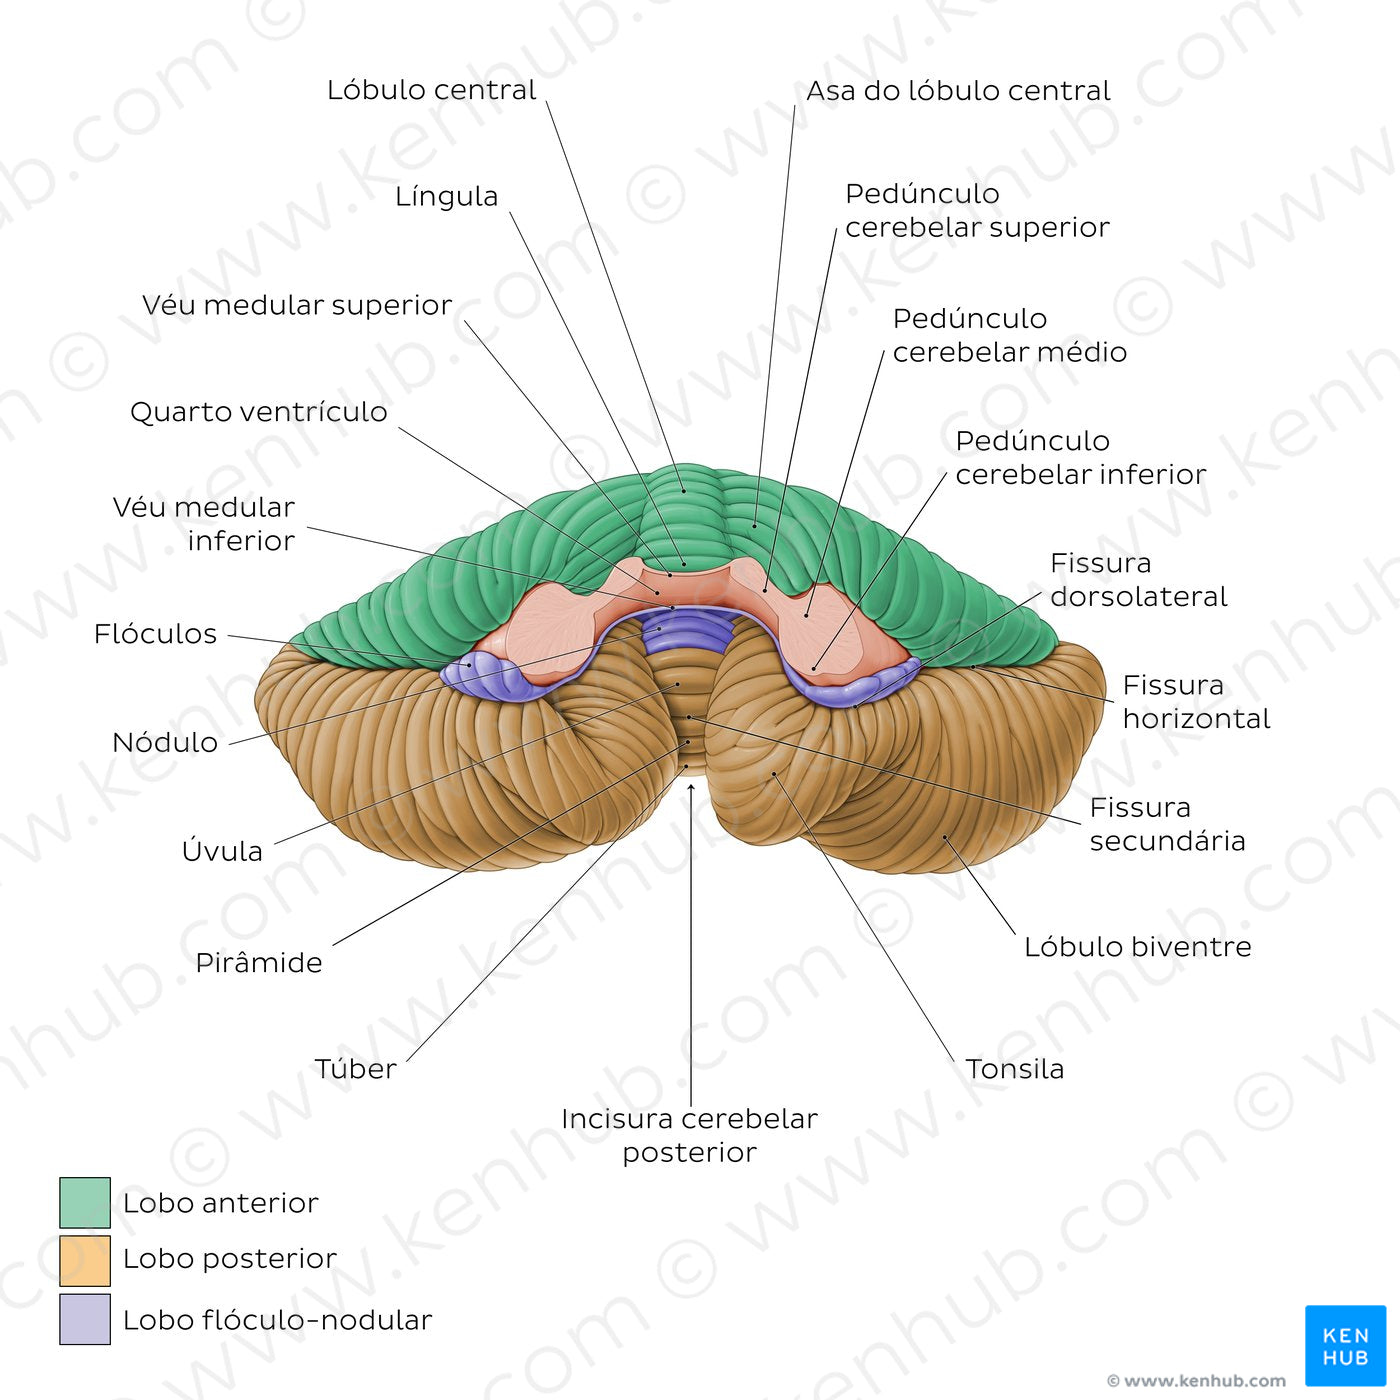 Cerebellum - Anterior view (Portuguese)